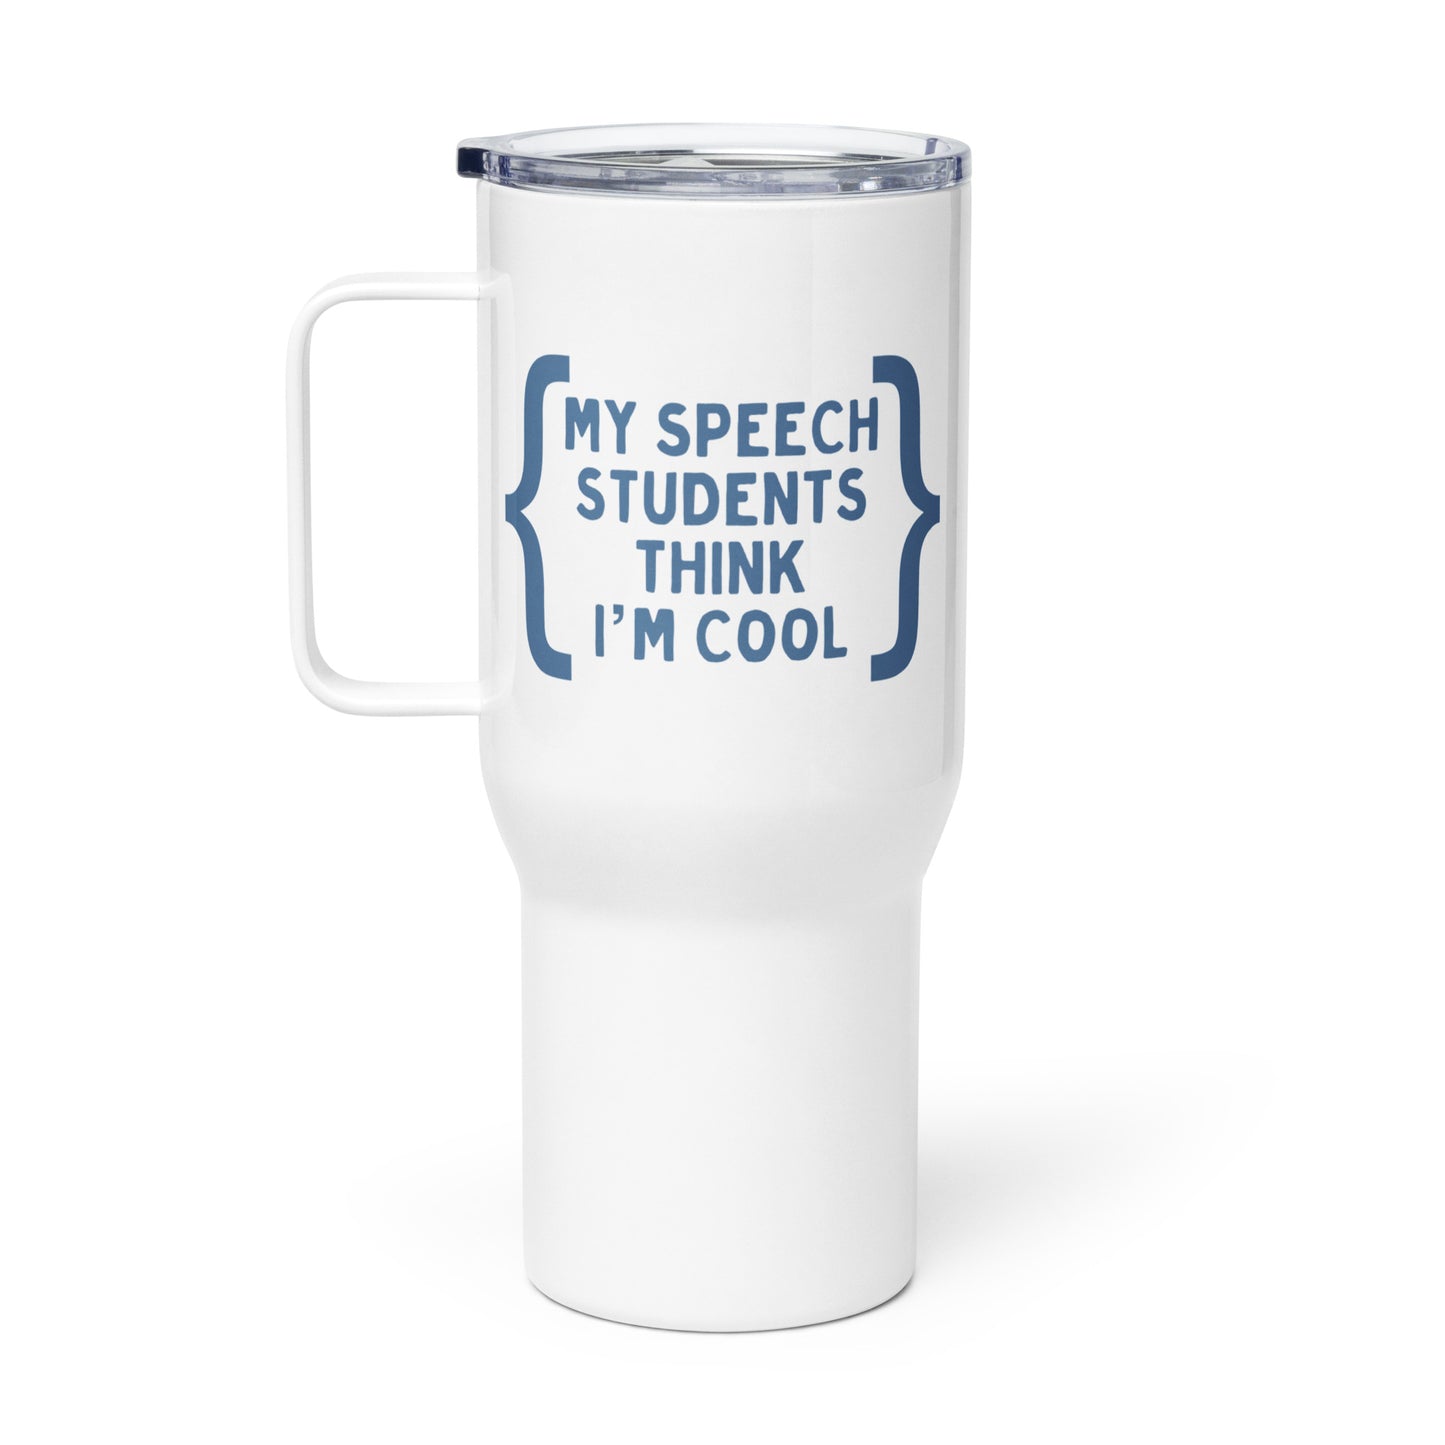 "My Speech Students Think I'm Cool" Travel Mug